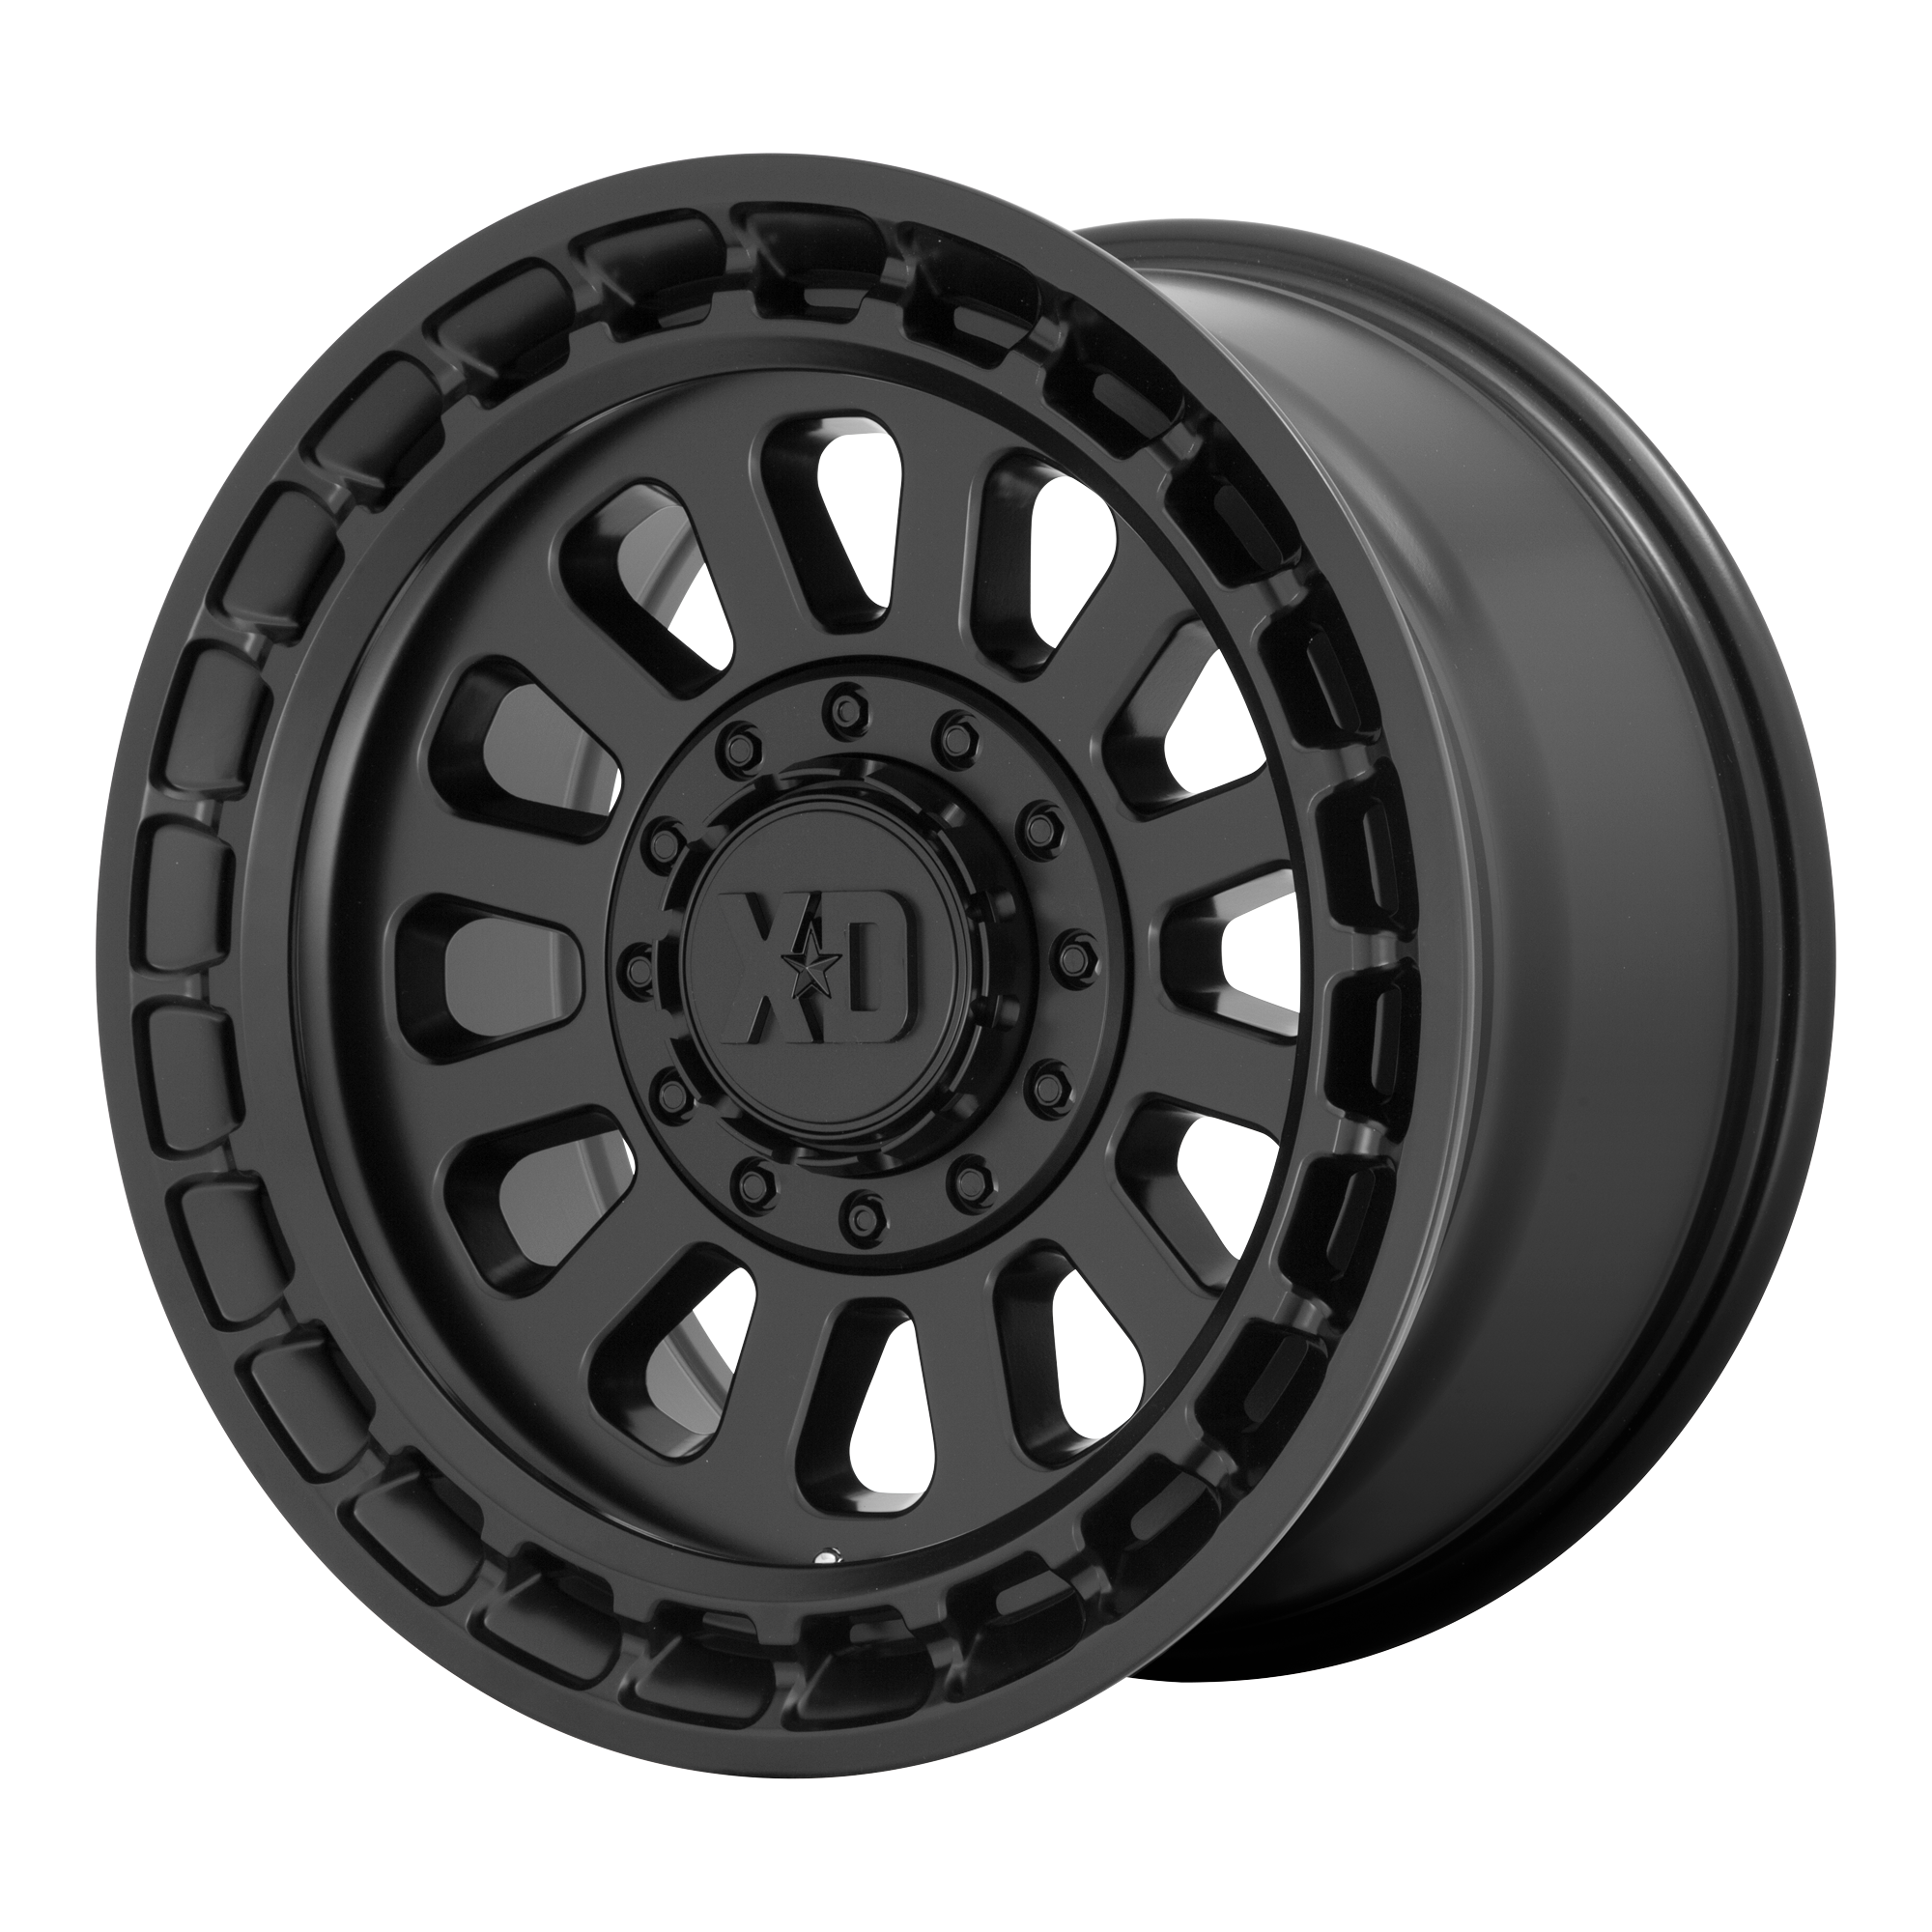 XD 17"x9" Non-Chrome Satin Black Custom Wheel ARSWCWXD85679035712N